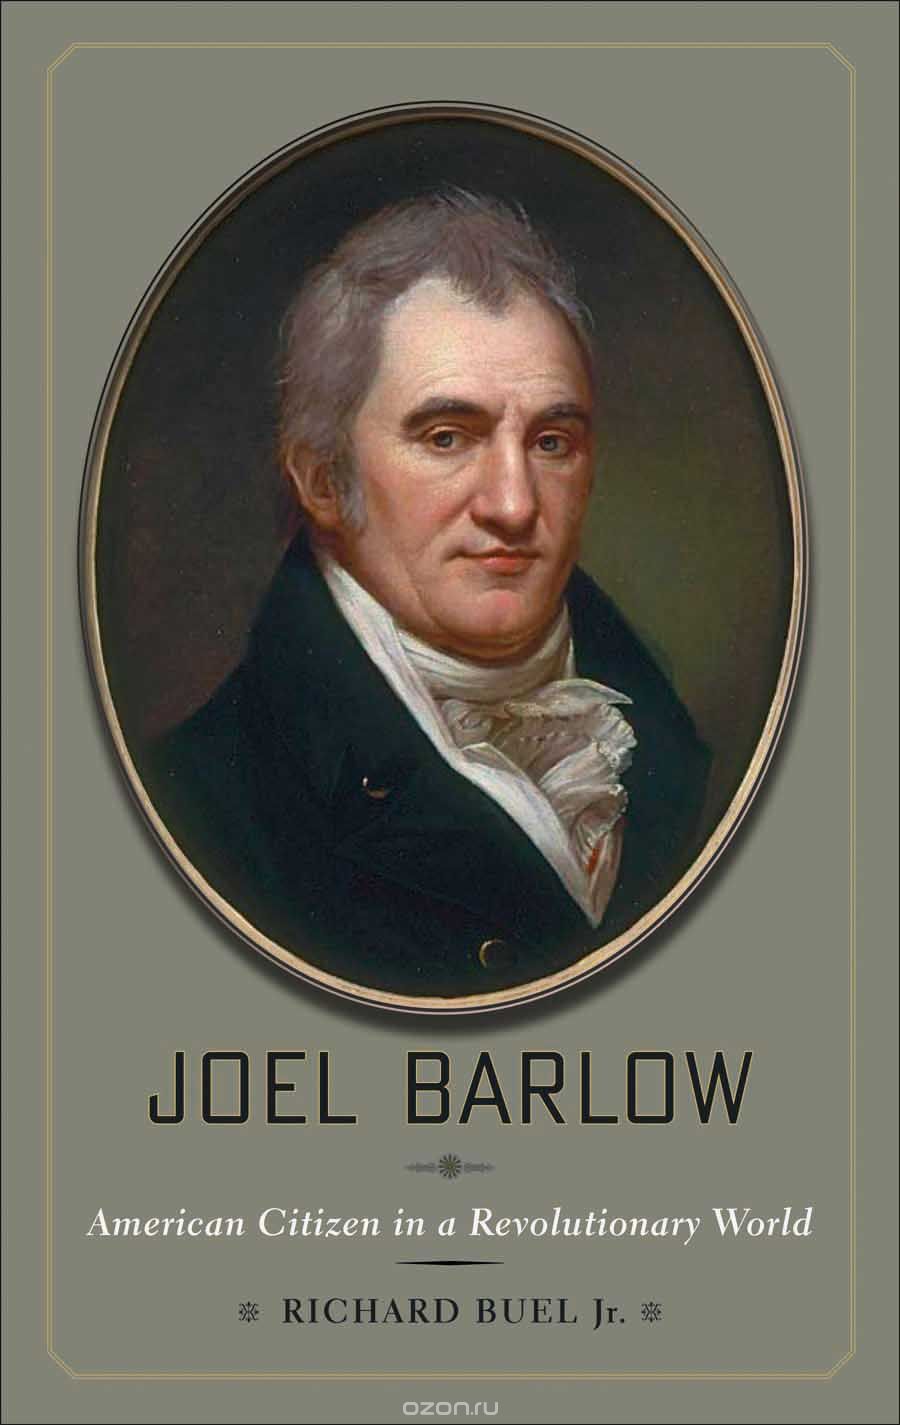 Скачать книгу "Joel Barlow – American Citizen in a Revolutionary World"